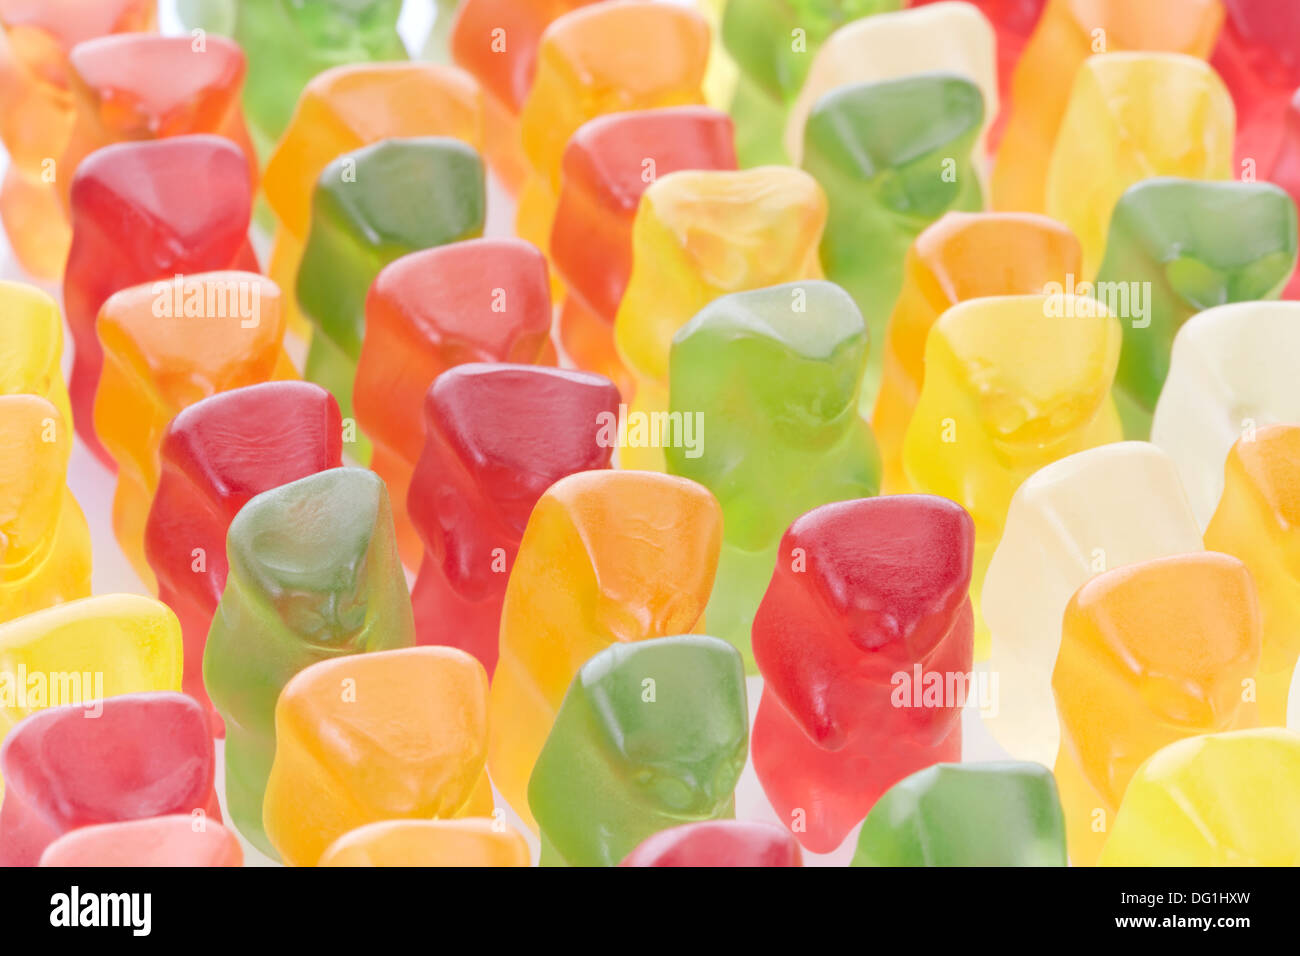 Gummy bears, crowd concept Stock Photo